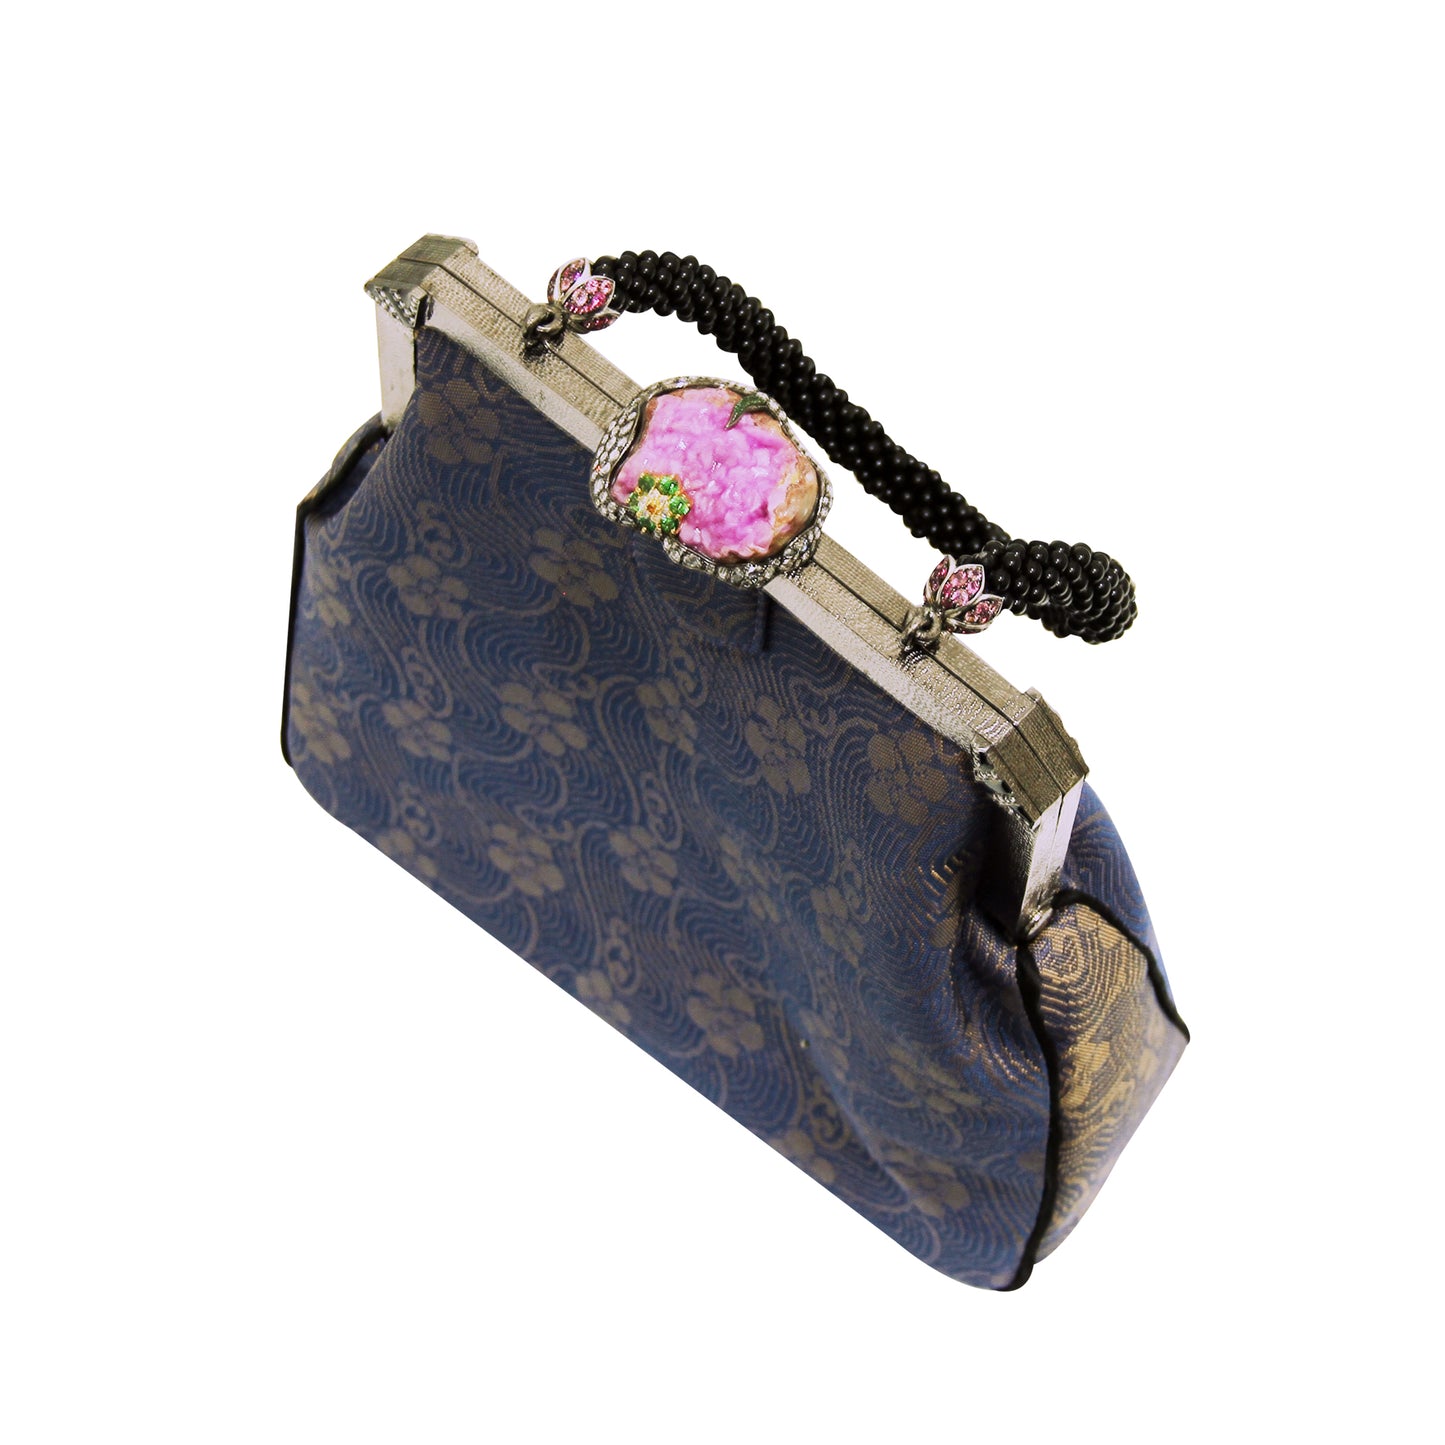 Japanese Handbag with Pink Cobalt Calcite Diamond